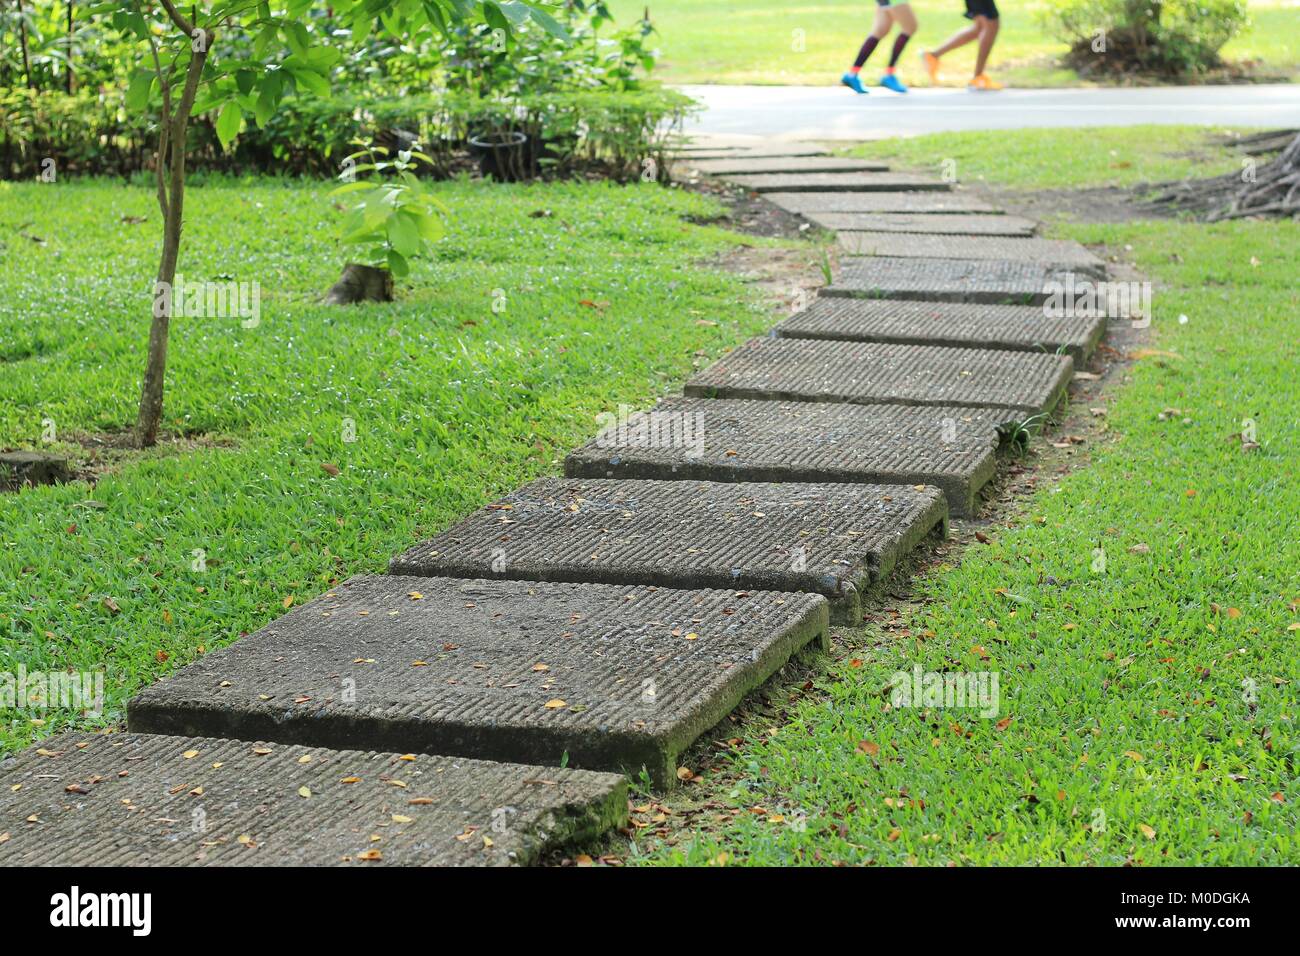 Cement Block Walkway In The Park Stock Photo 172402142 Alamy